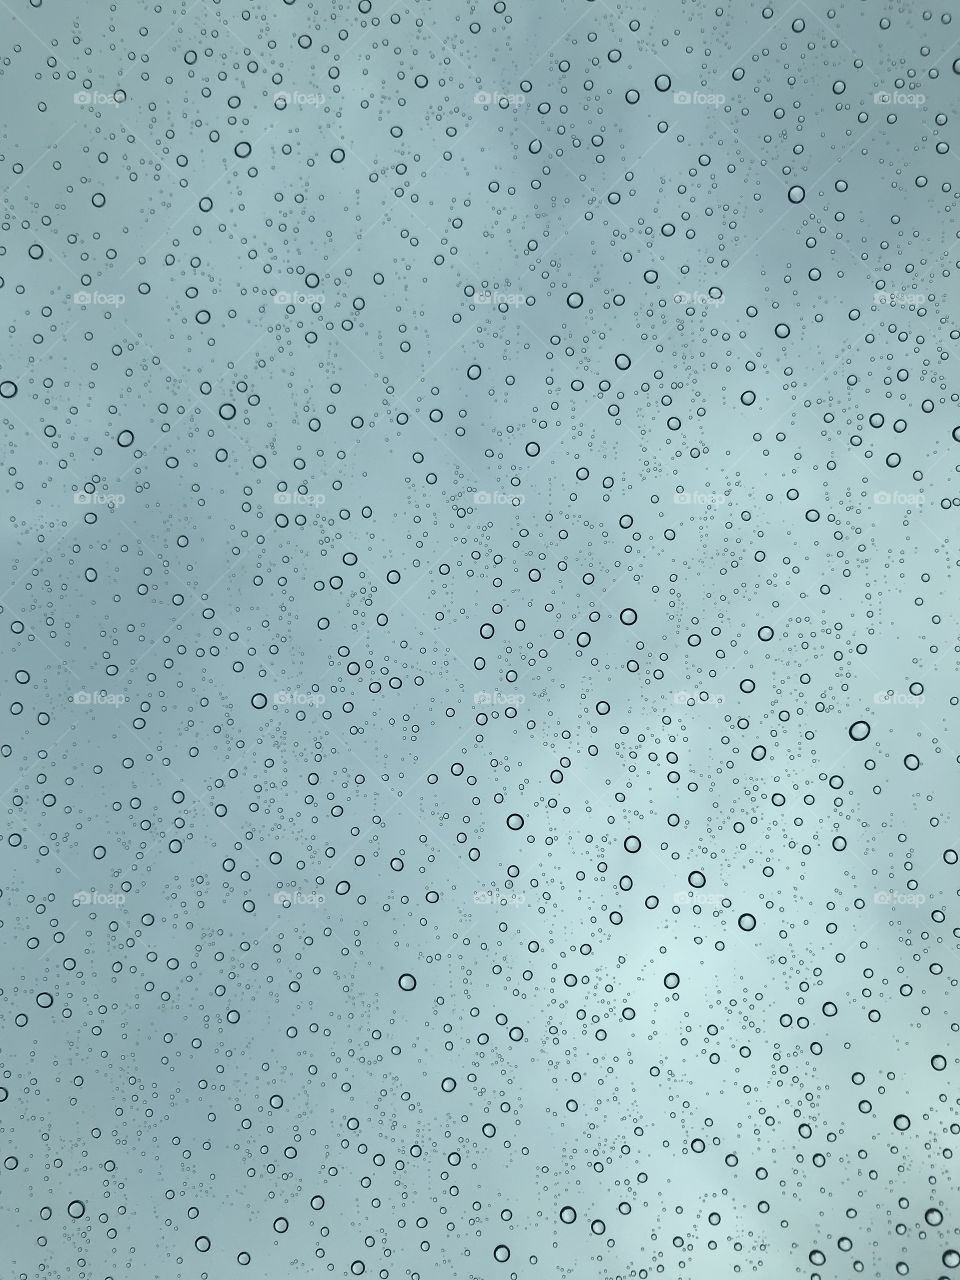 Rainy glass